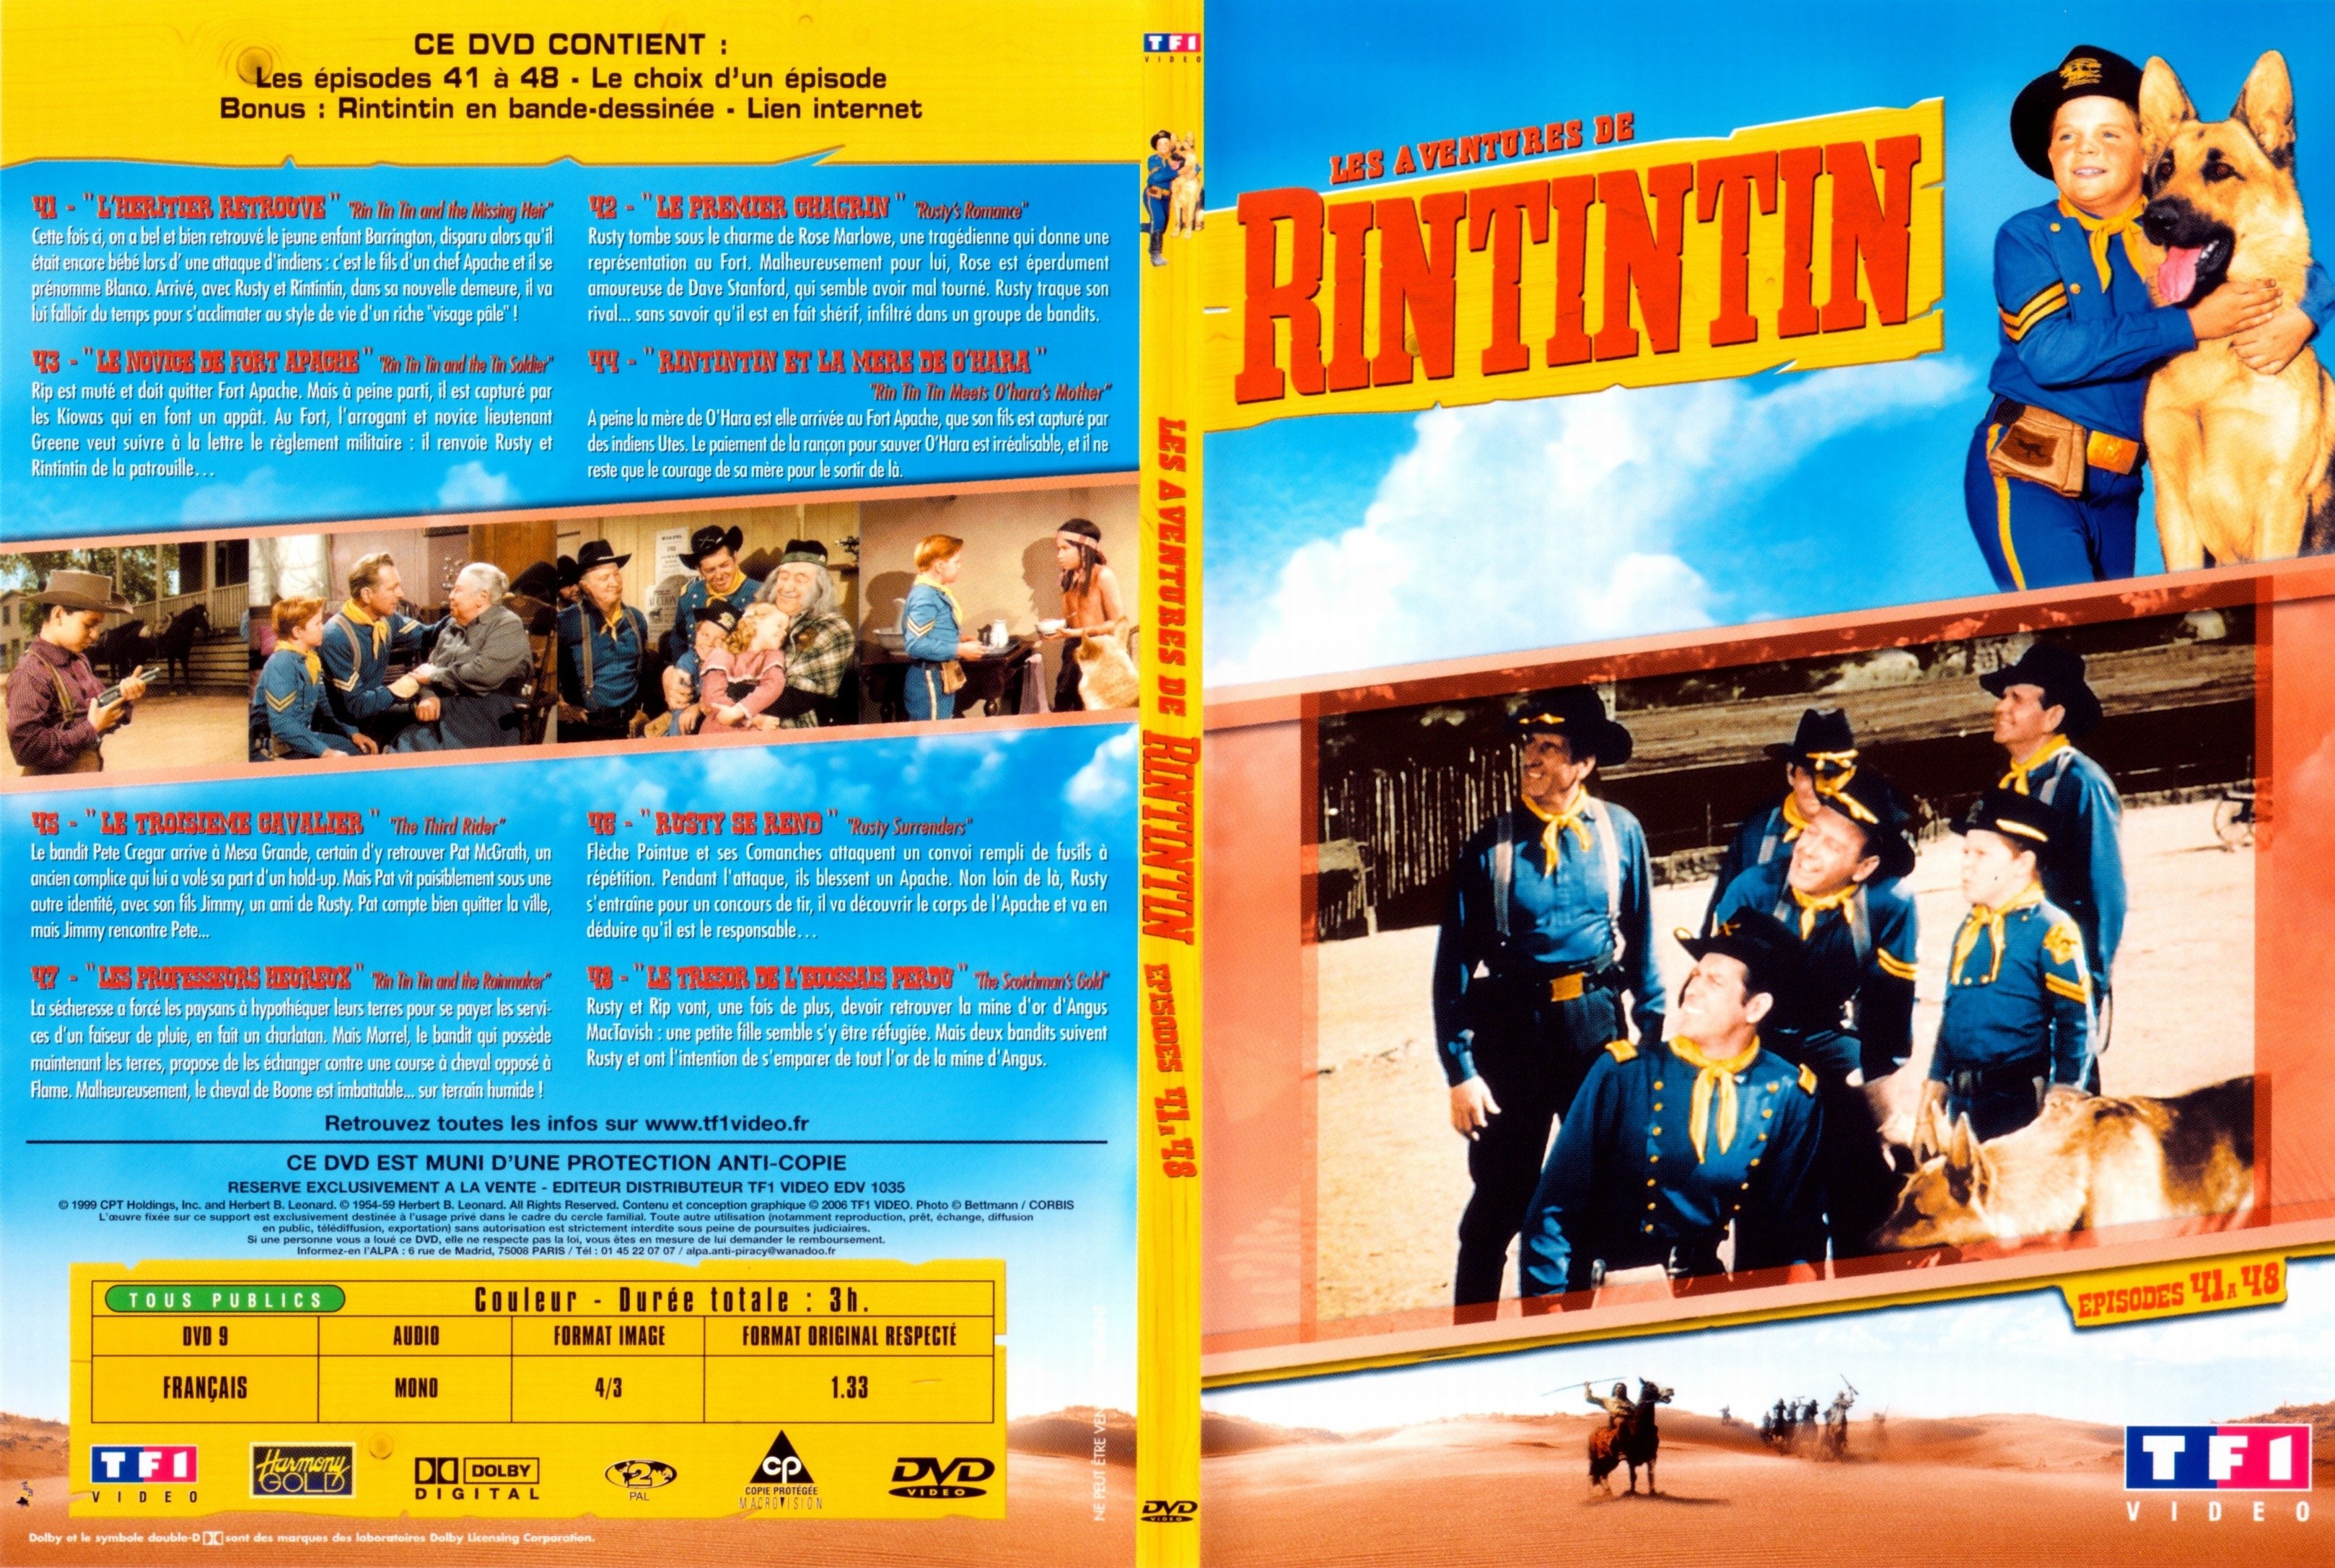 Jaquette DVD Les aventures de Rintintin vol 2 DVD 2